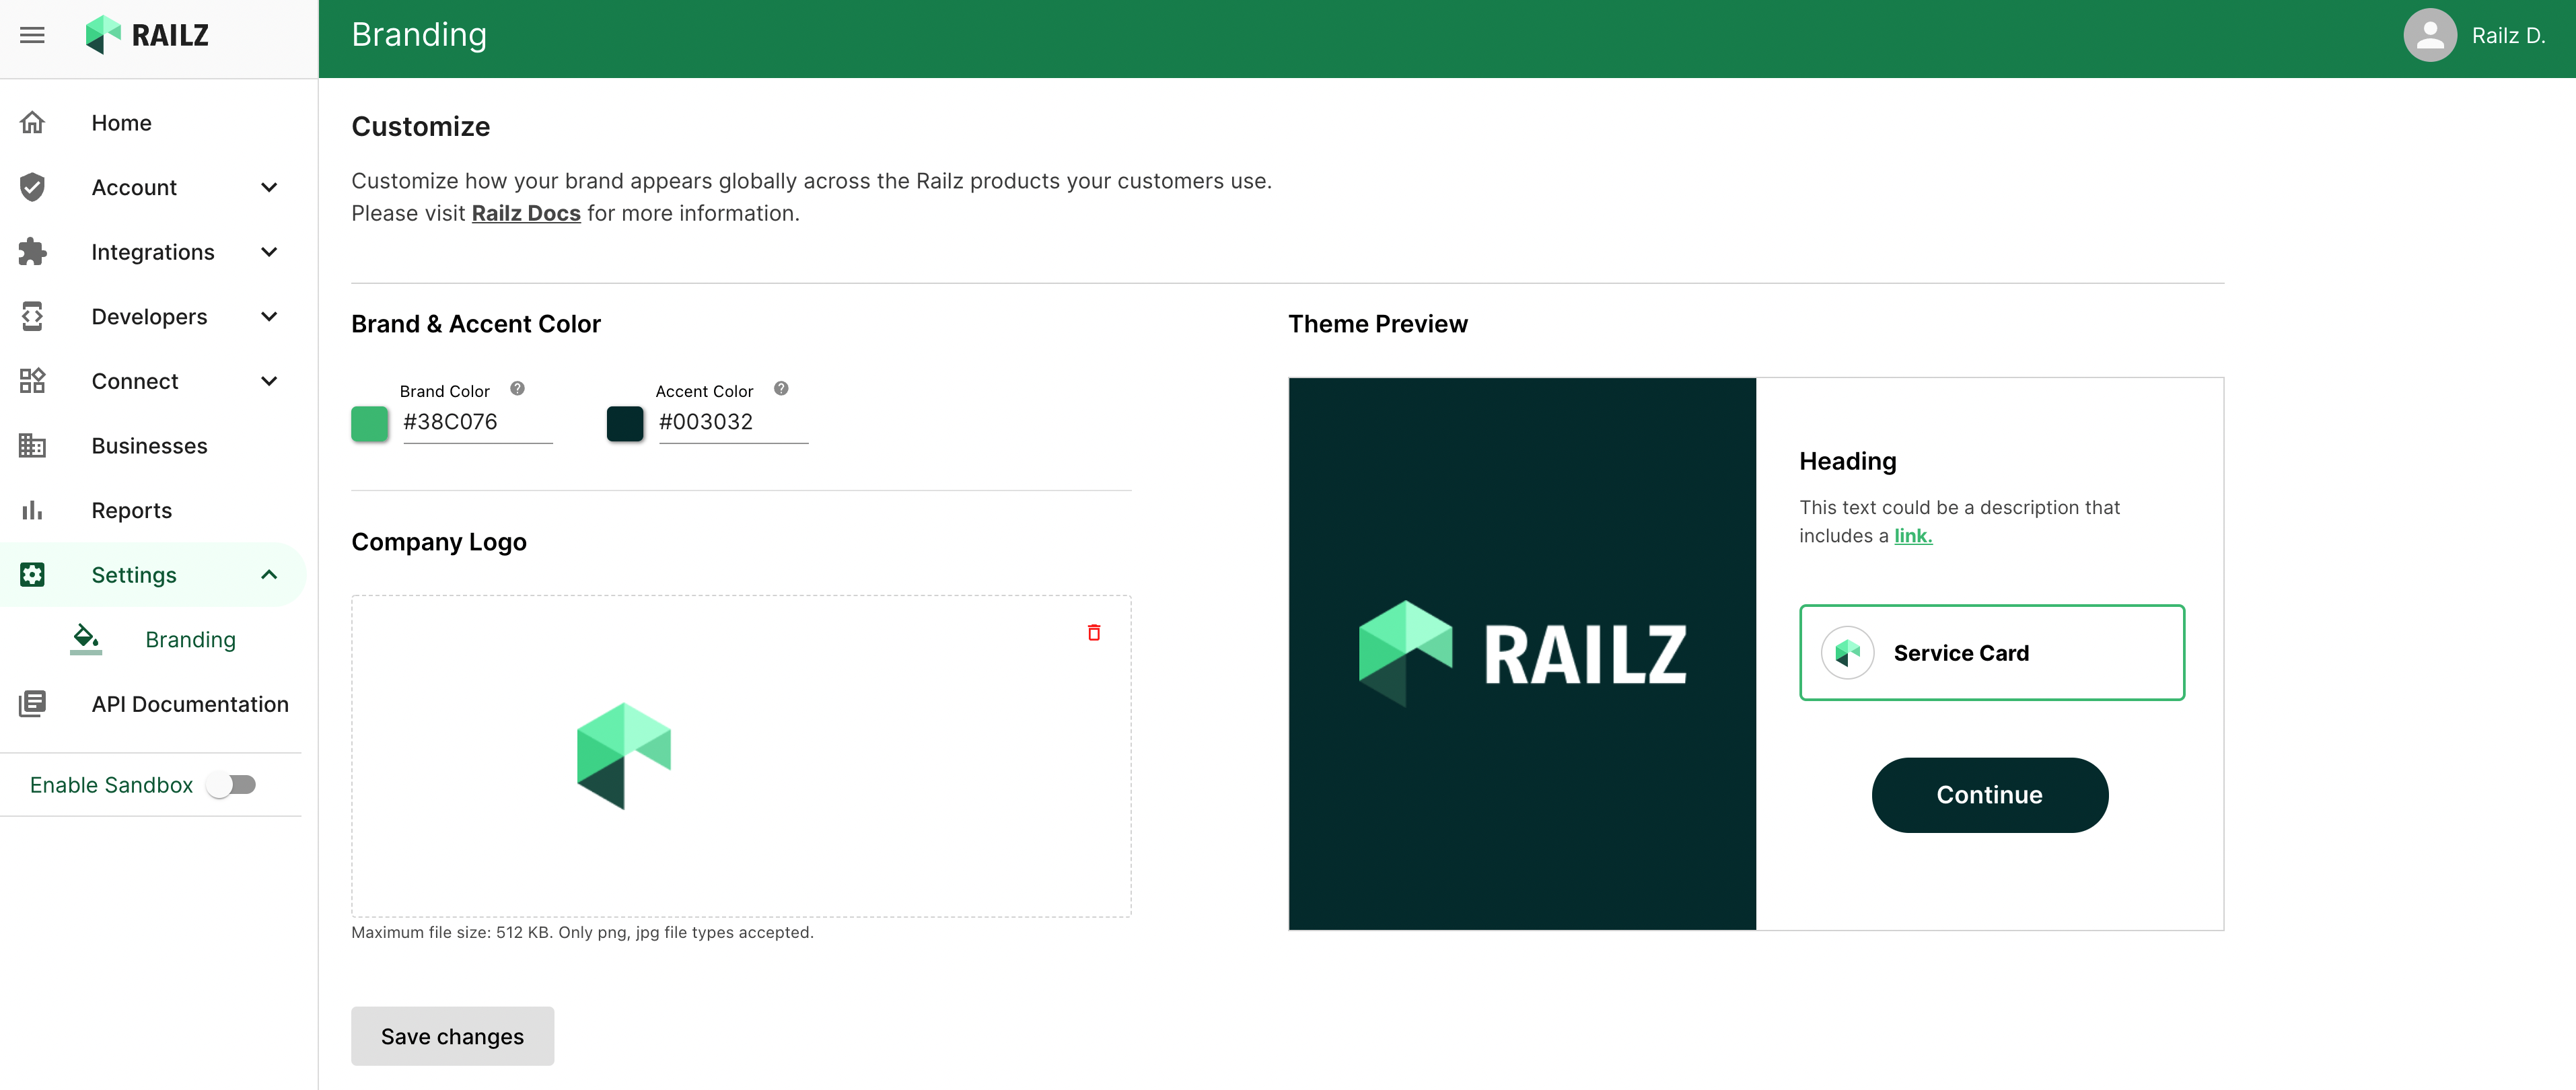 Railz Dashboard - Brand Settings. Click to Expand.